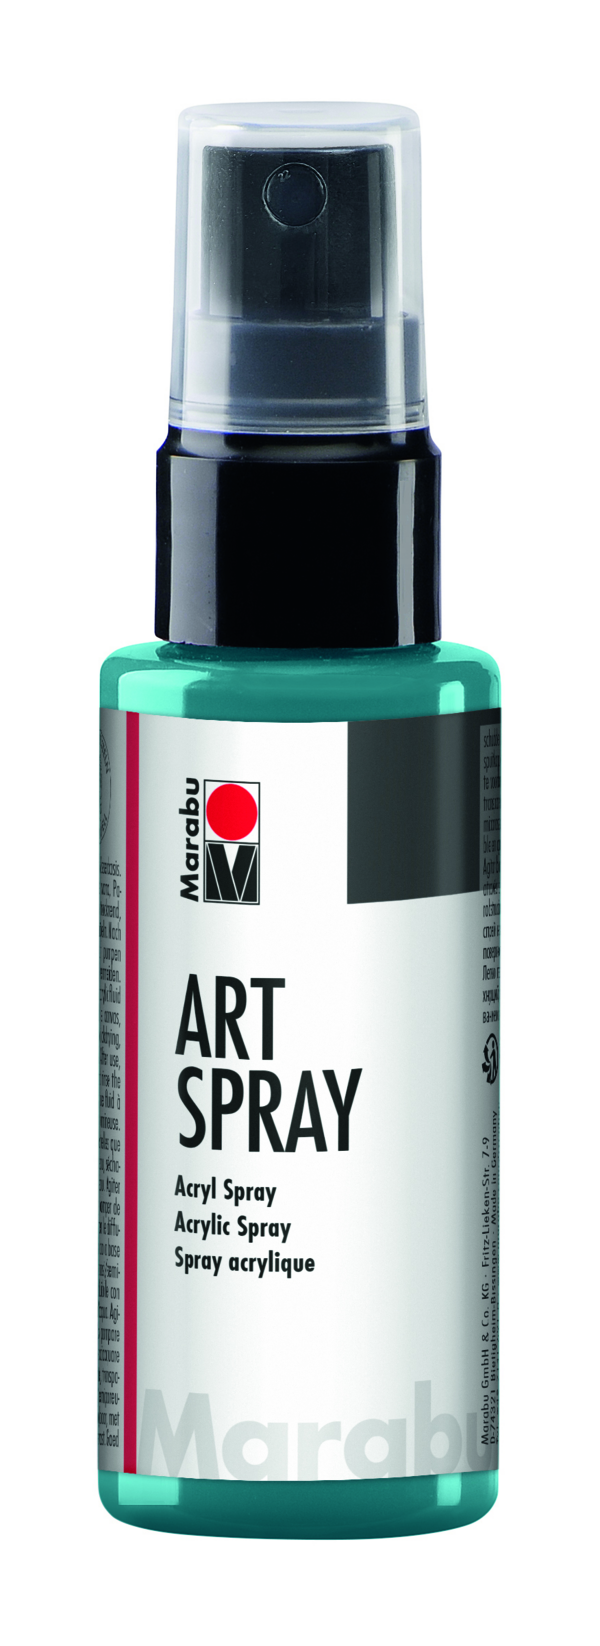 Petrol - Art Spray